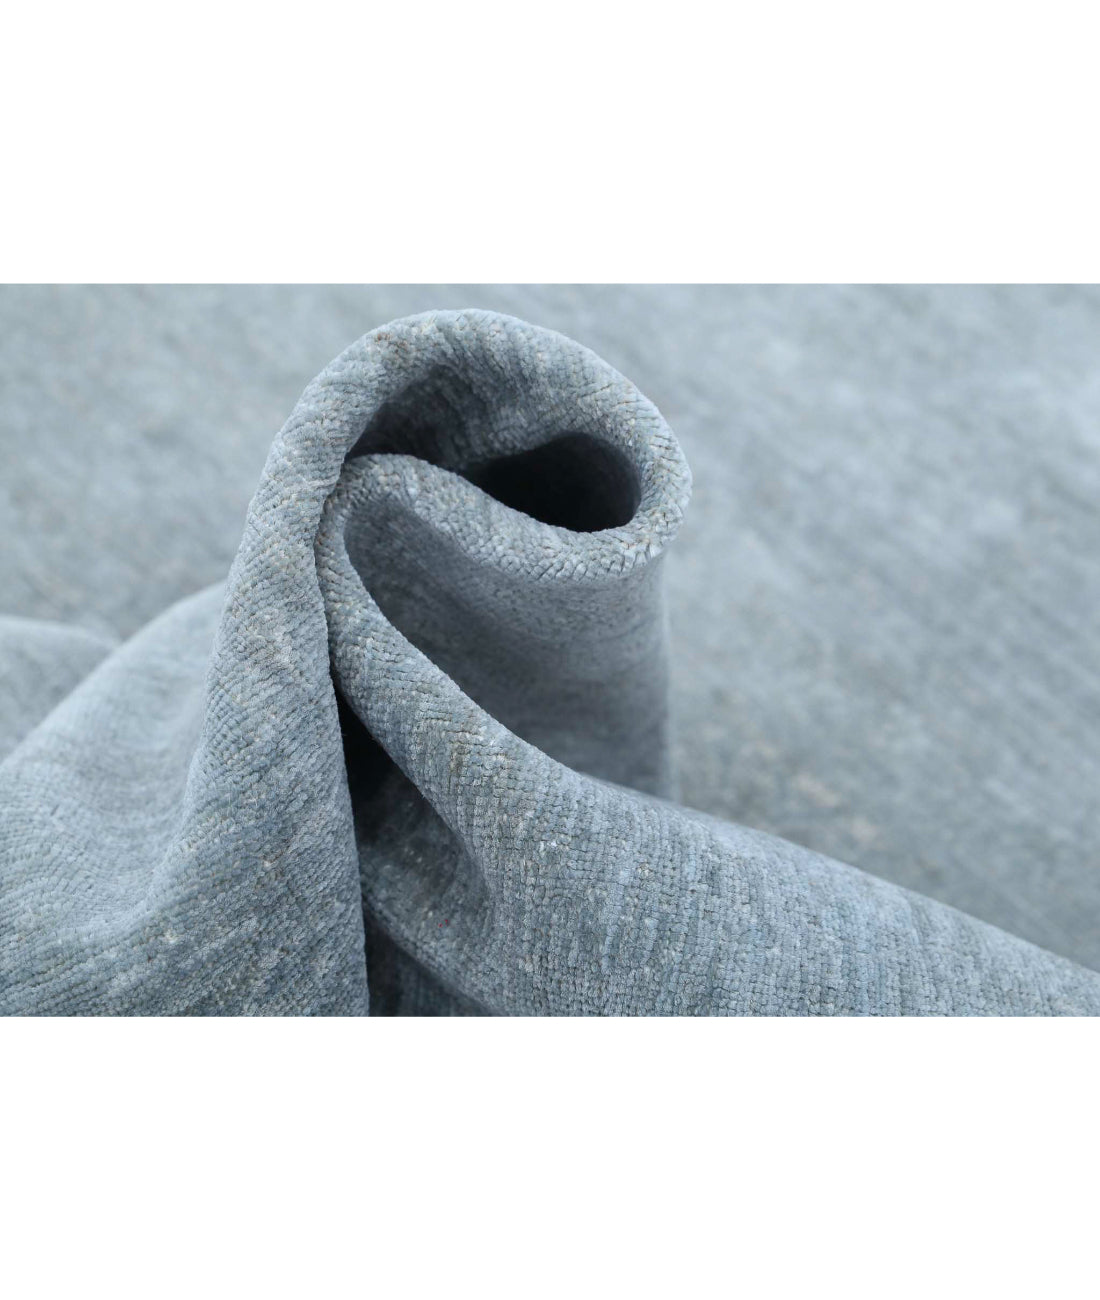 Hand Knotted Overdye Wool Rug - 5'2'' x 14'10'' 5'2'' x 14'10'' (155 X 445) / Grey / Grey